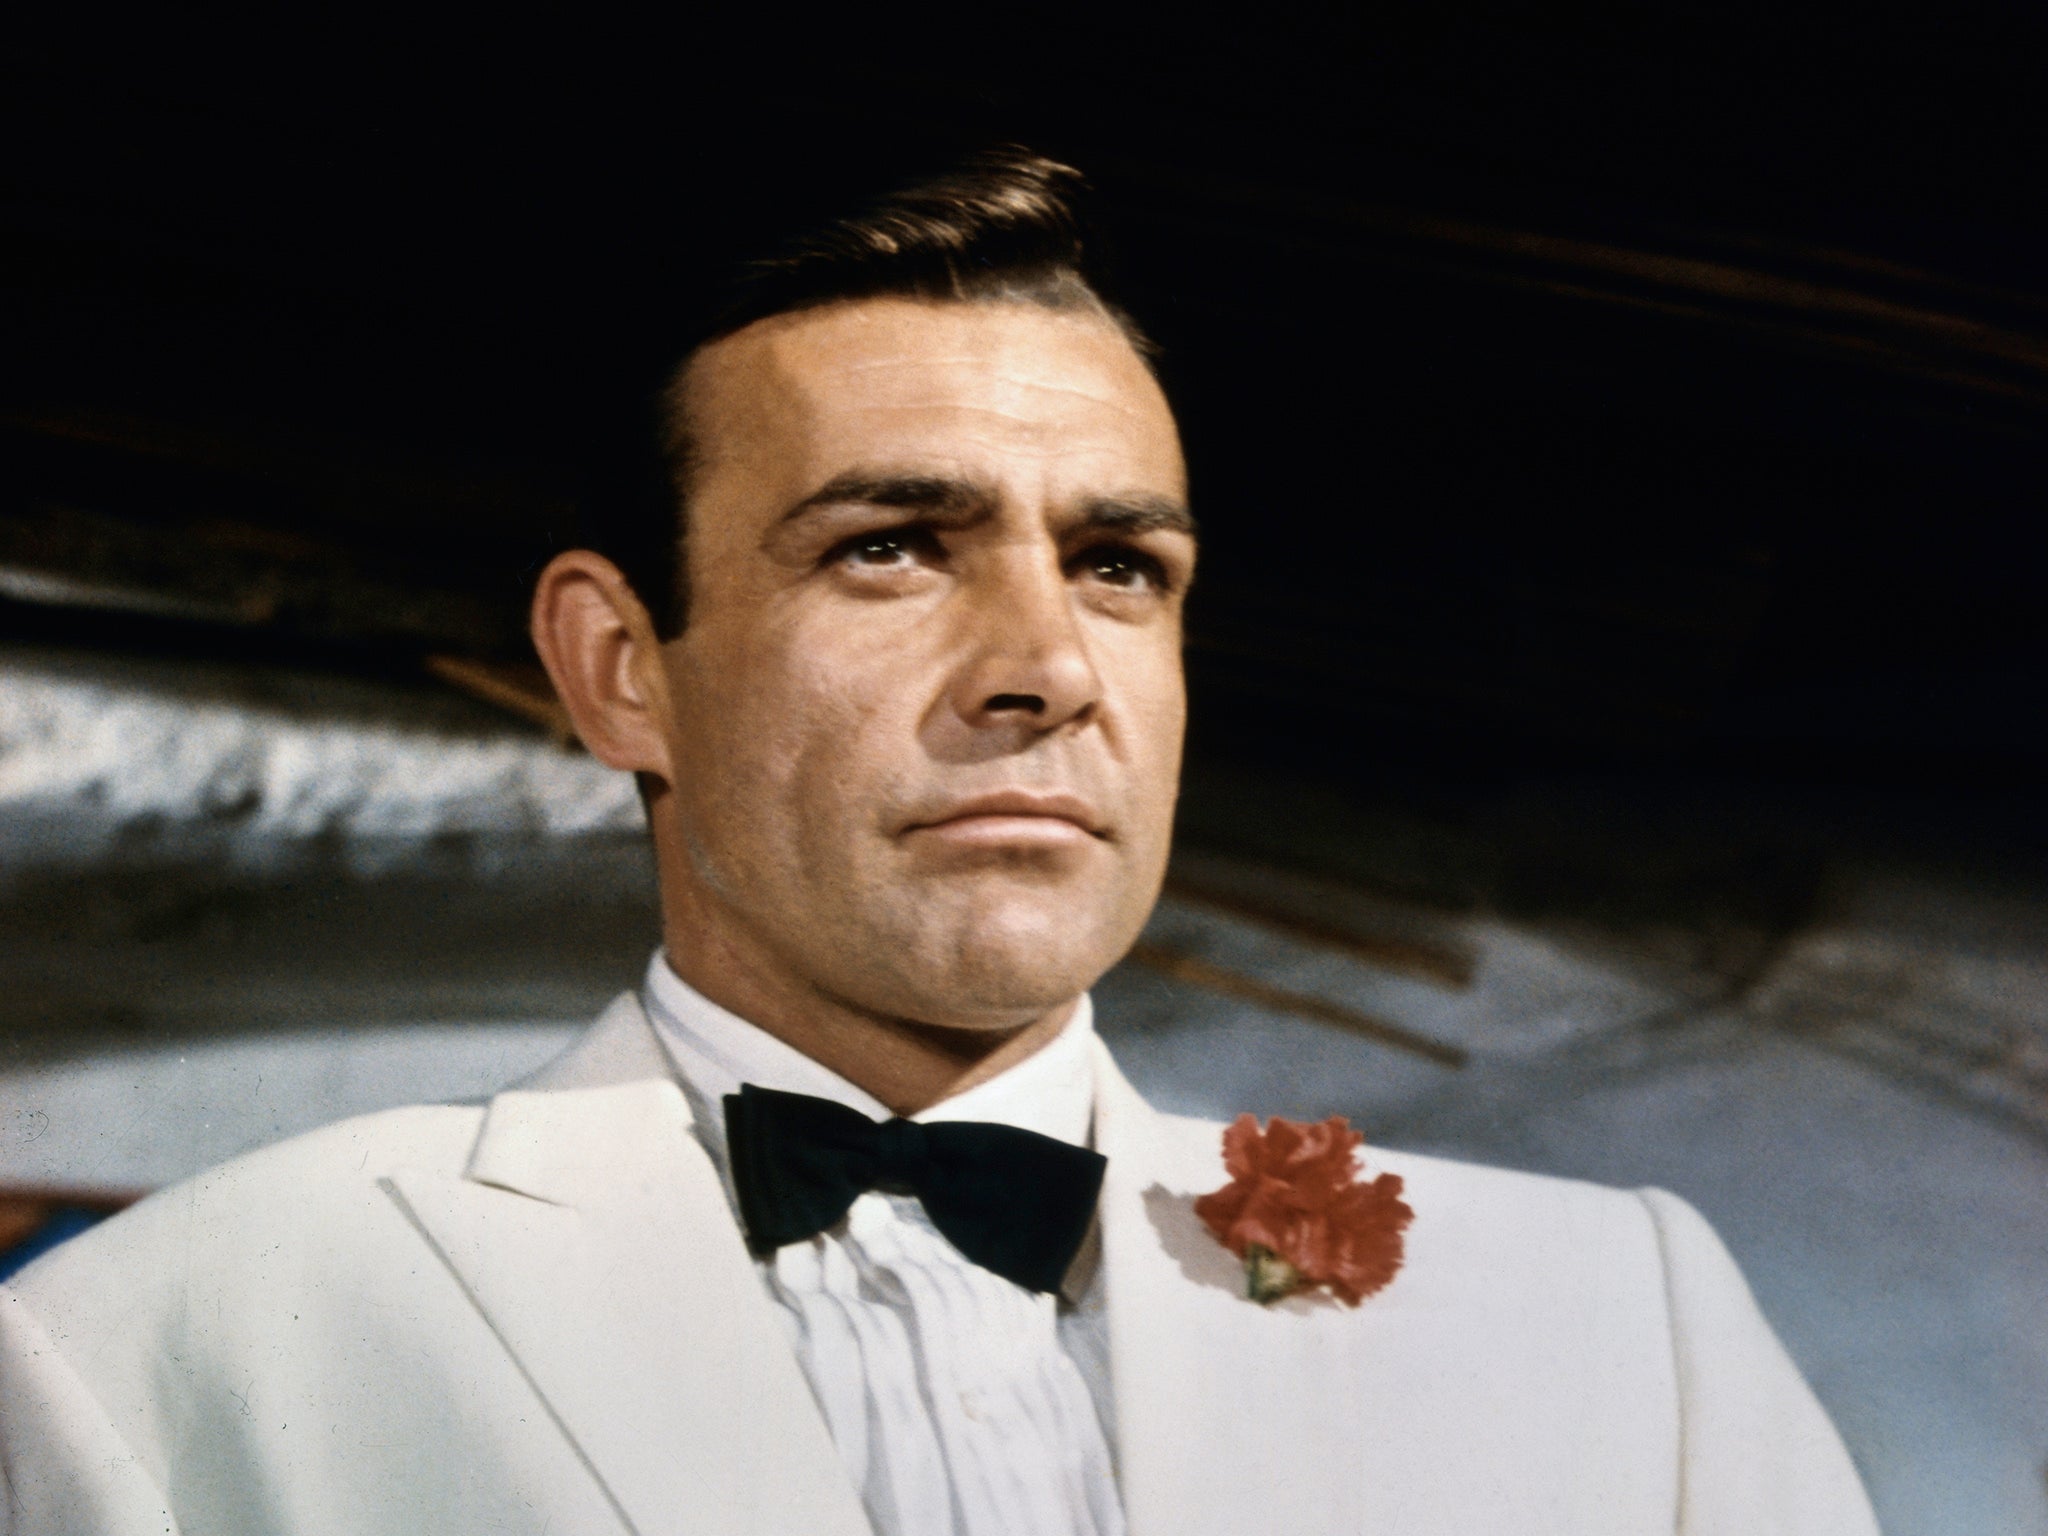 Bond Wardrobe Review 1: Dr. No (1962) – Bond Suits